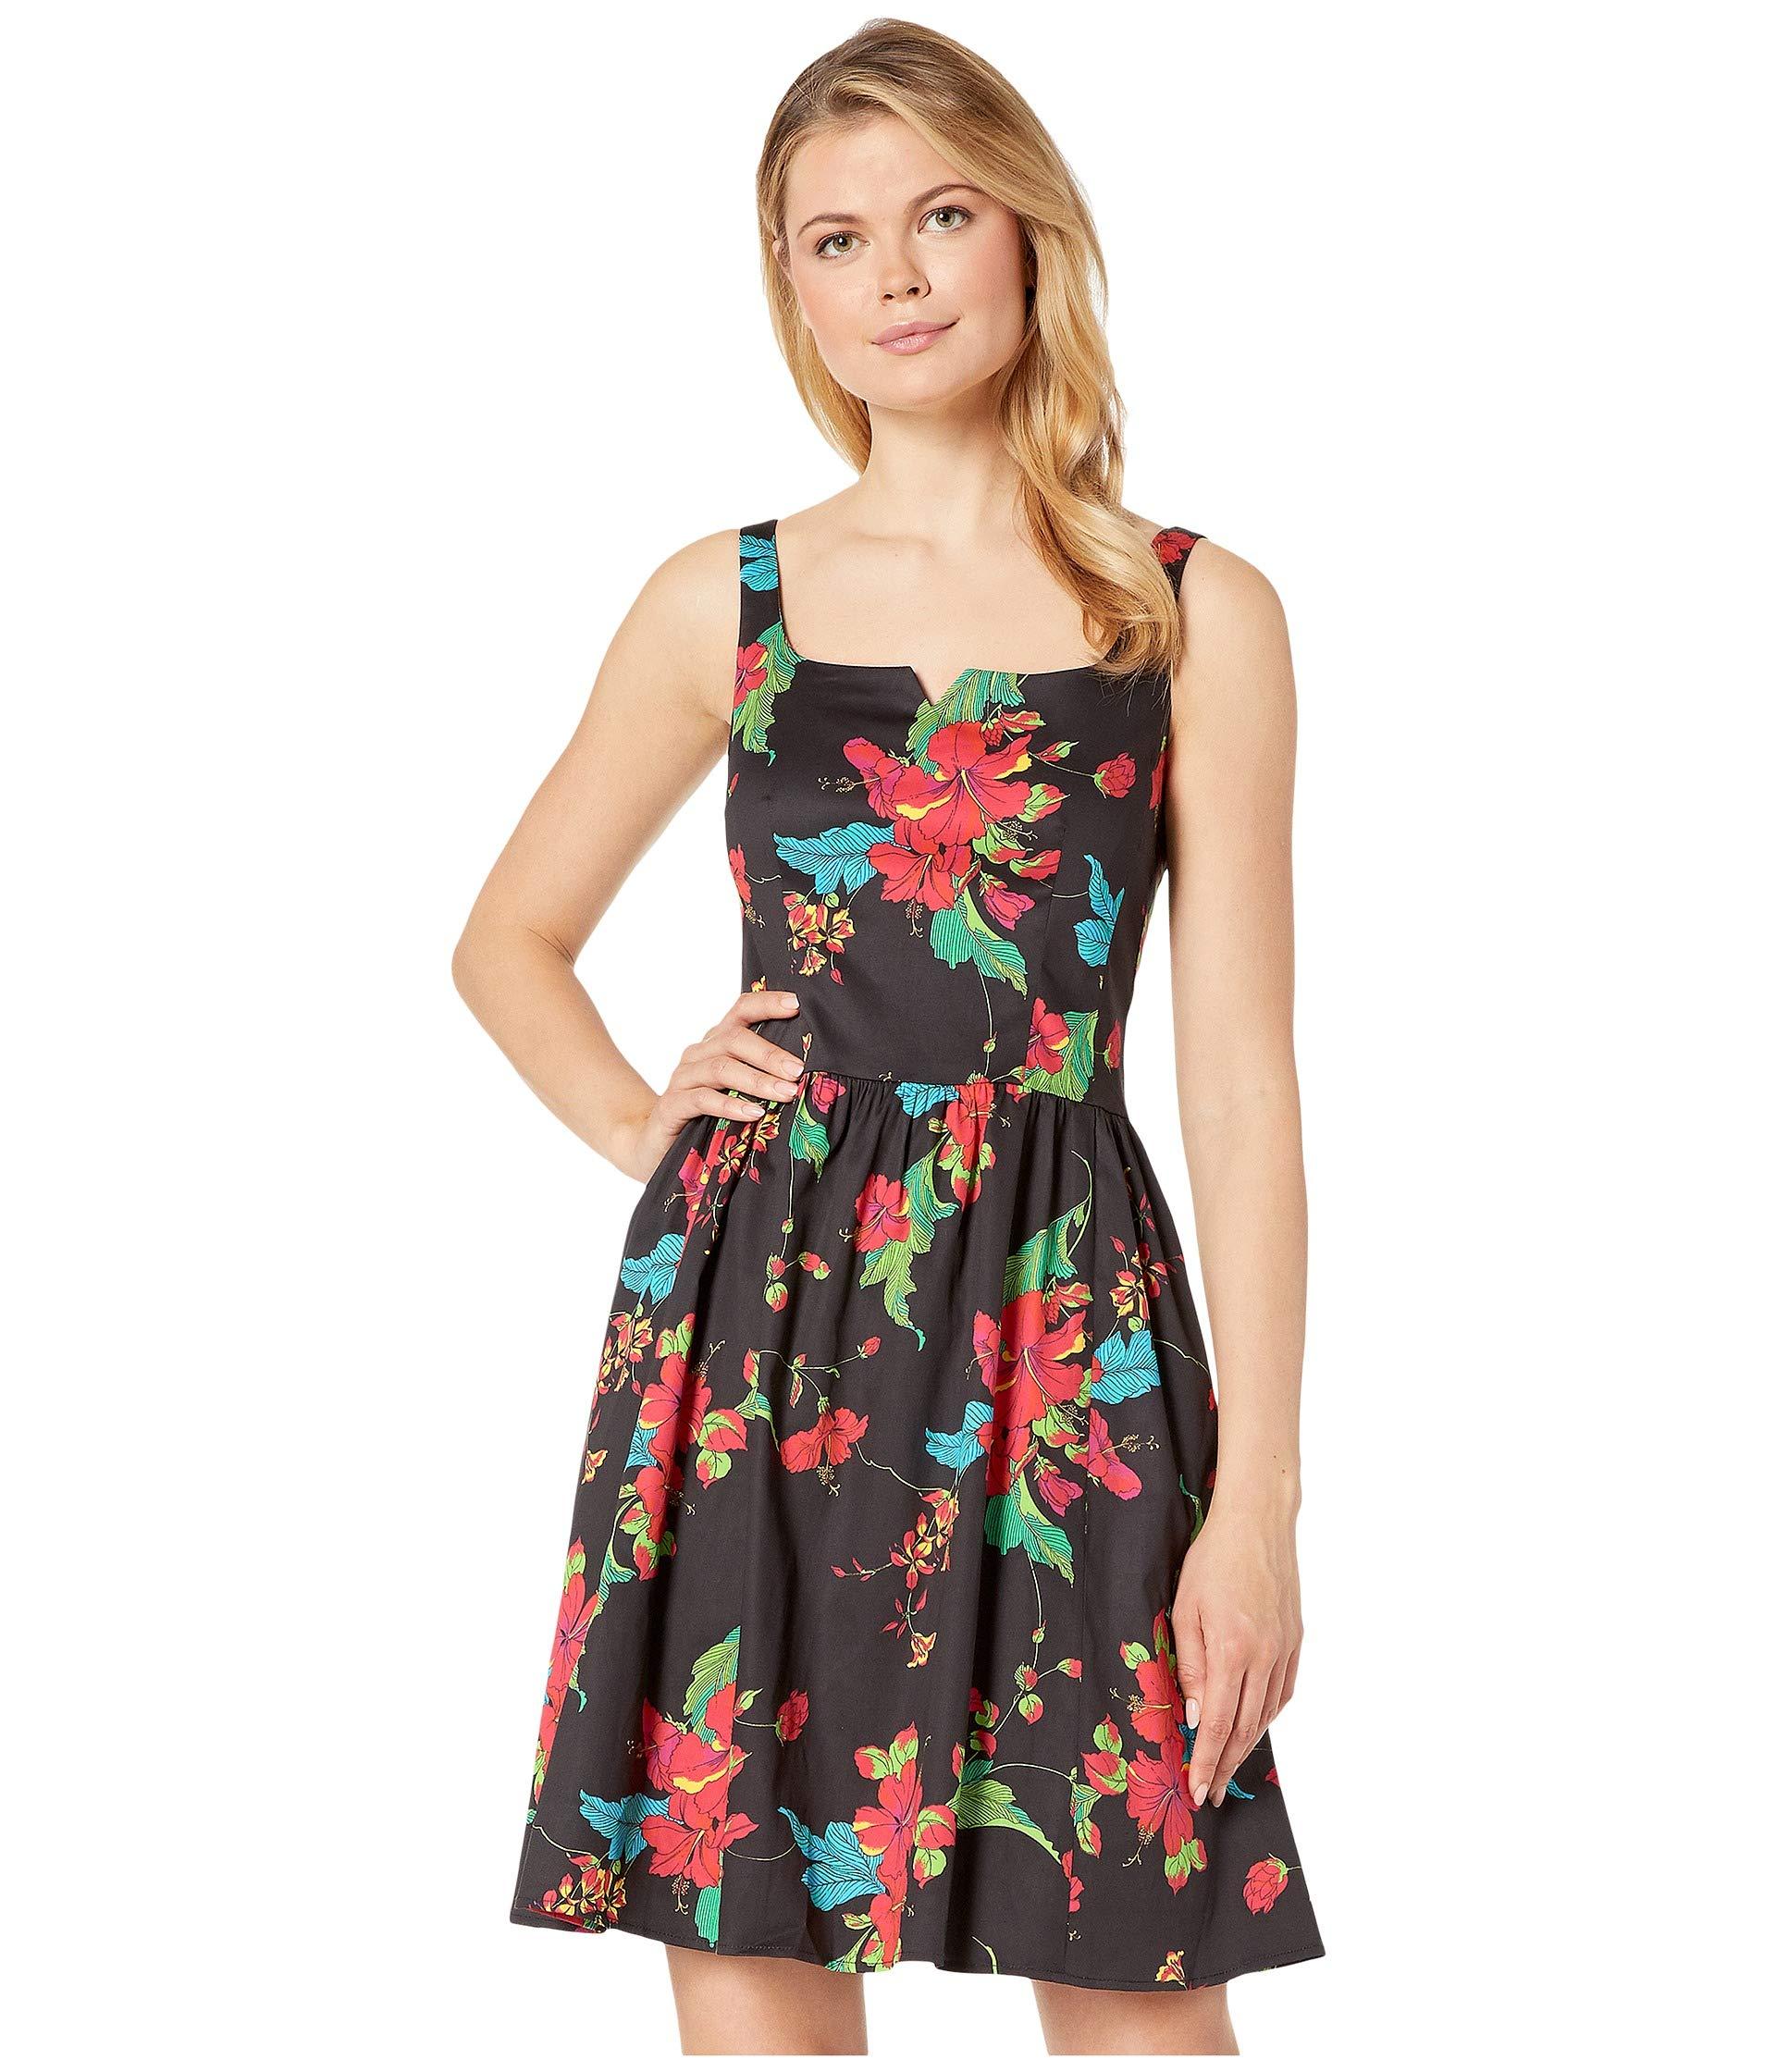 Nanette Lepore Cotton Floral Dress in Black - Lyst